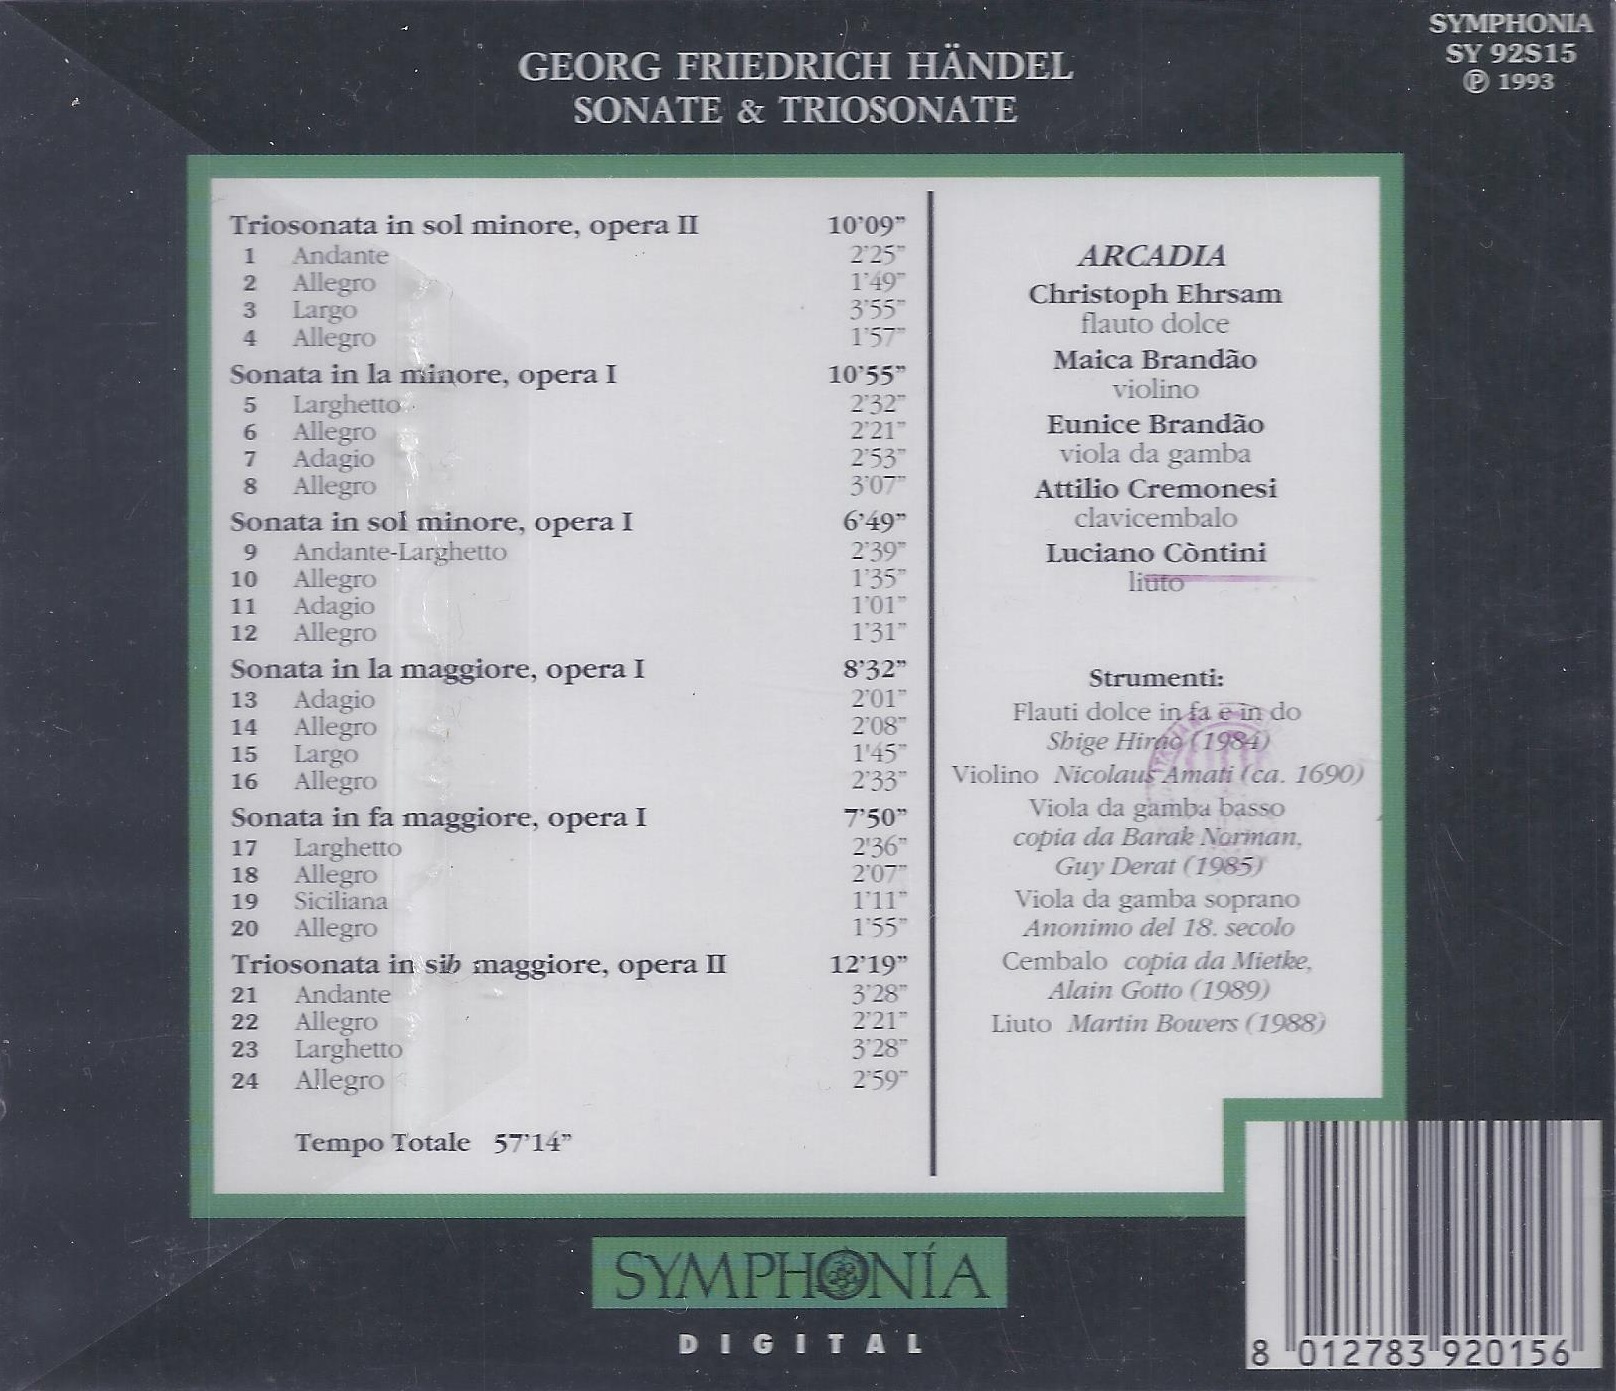 Handel: Sonate e trio sonate - slide-1